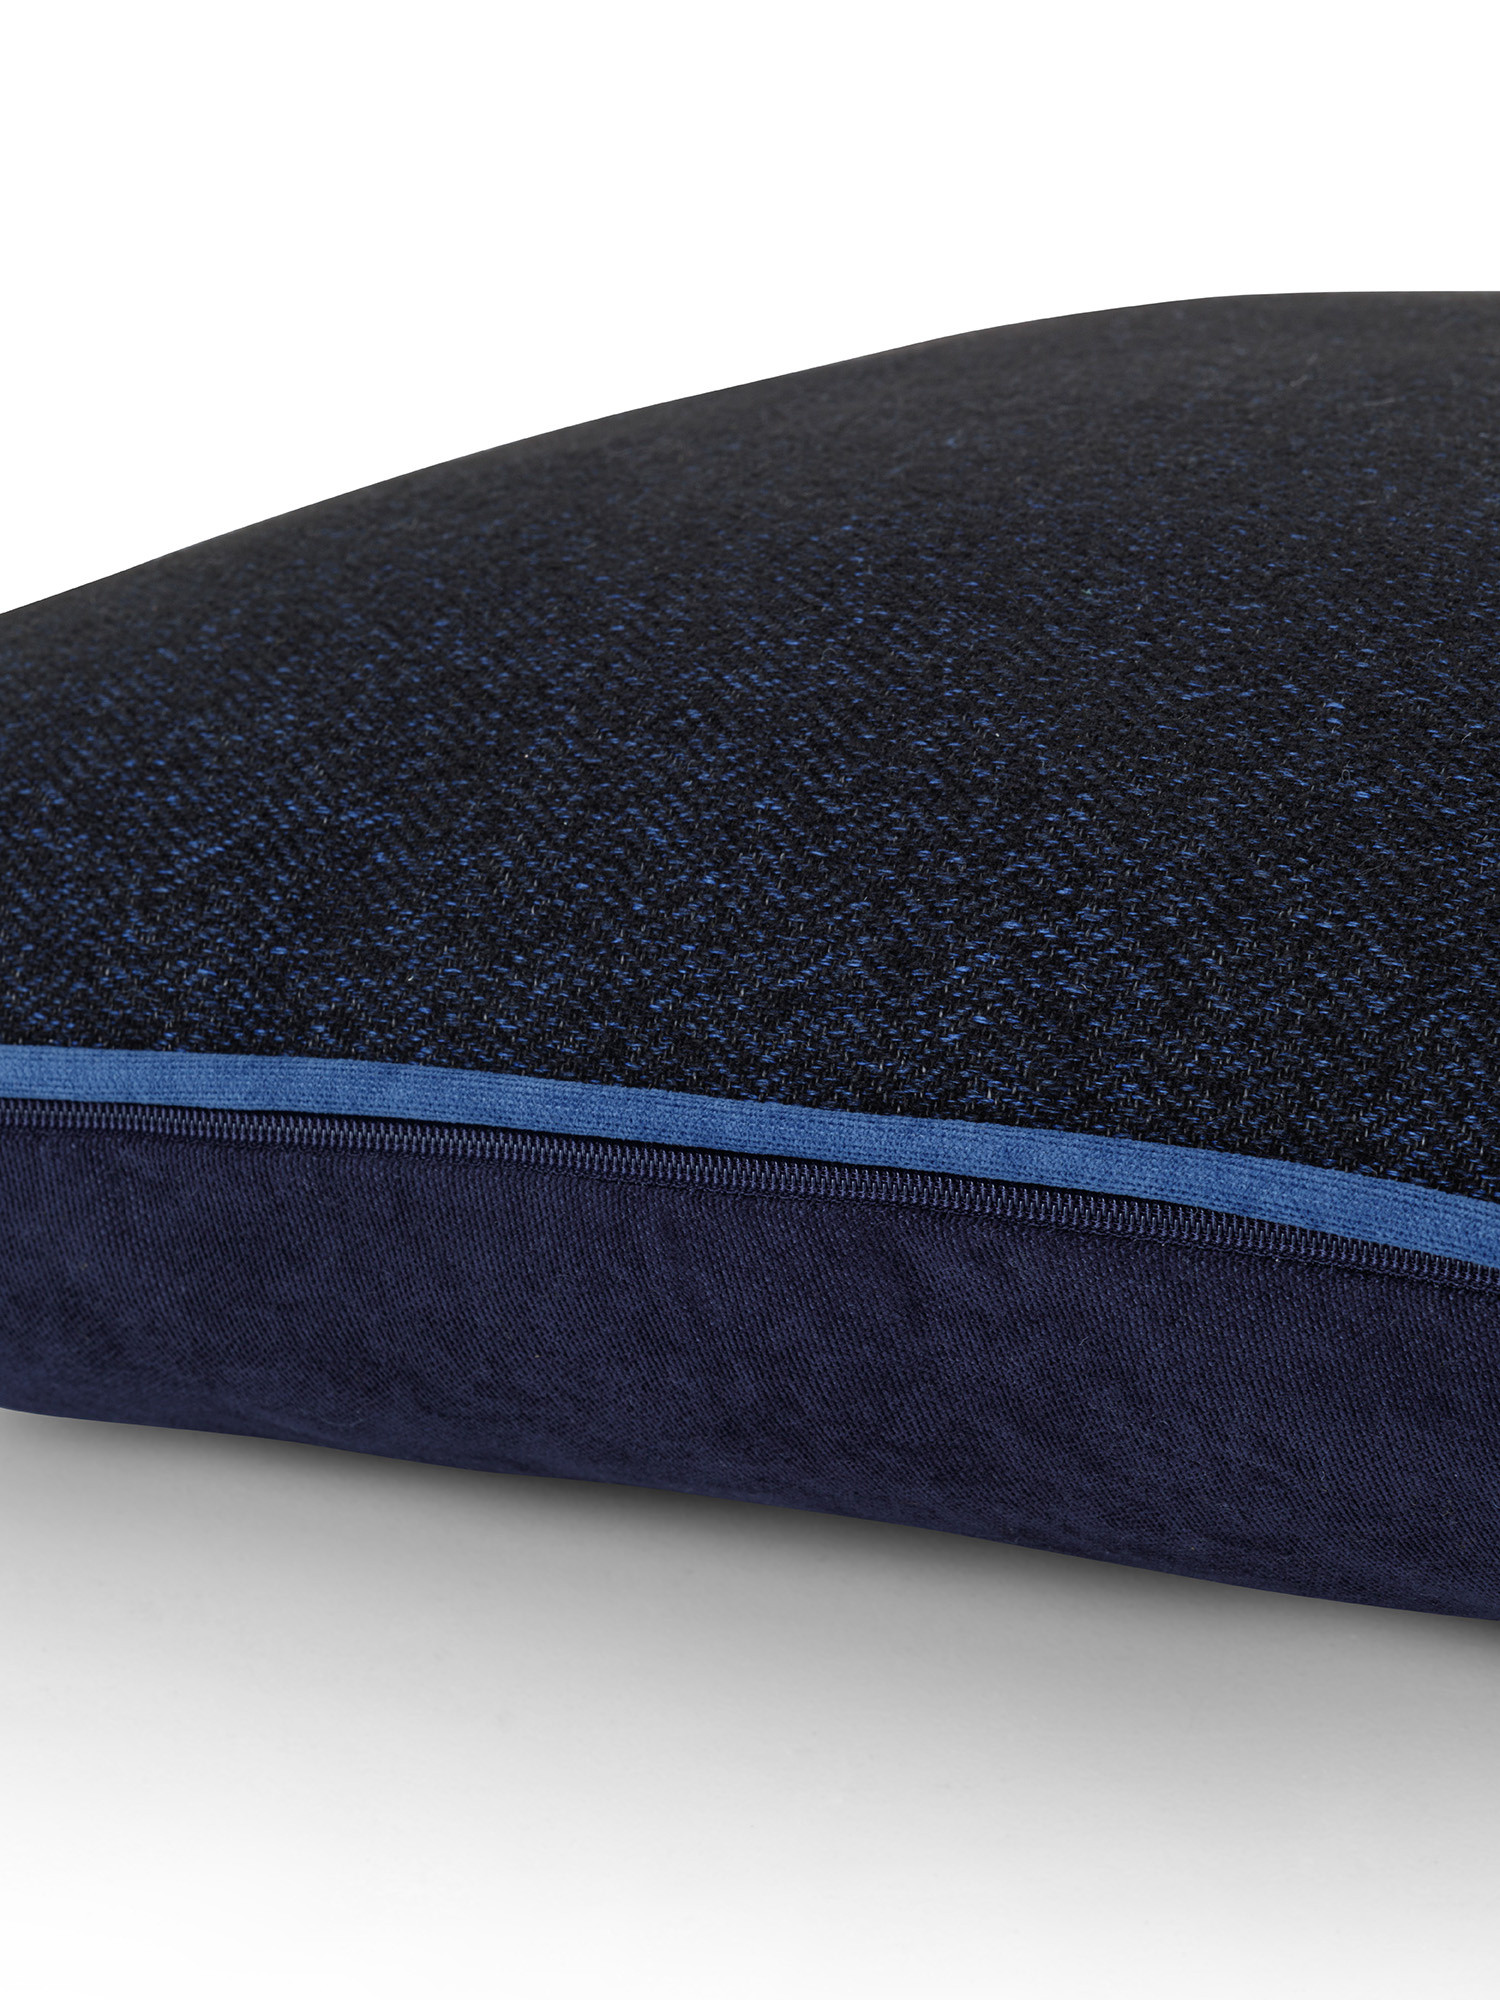 Cuscino in tessuto effetto Tweed a Spina di Pesce 45x45 cm, Blu scuro, large image number 2